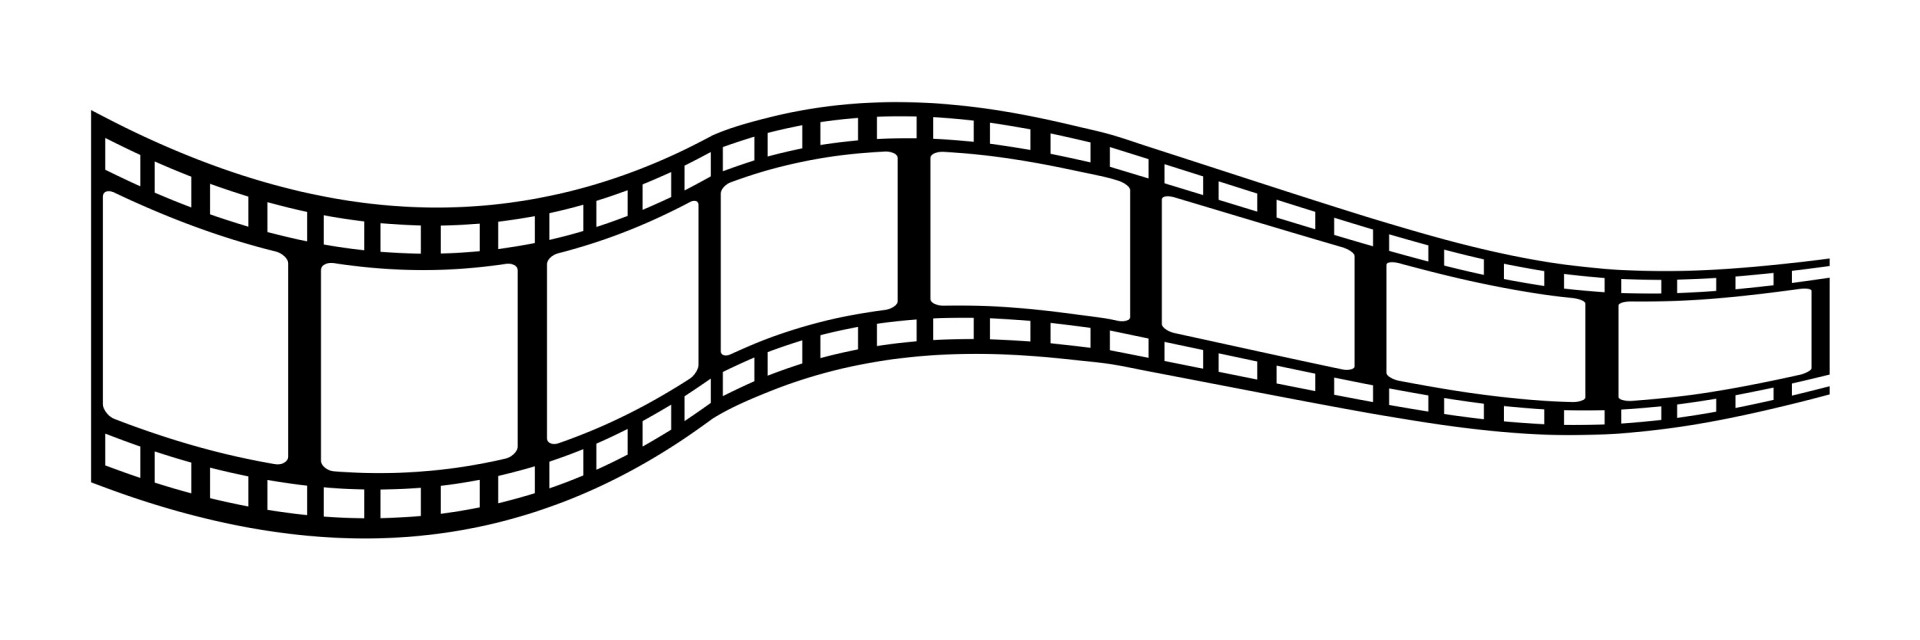 Image of a filmstrip